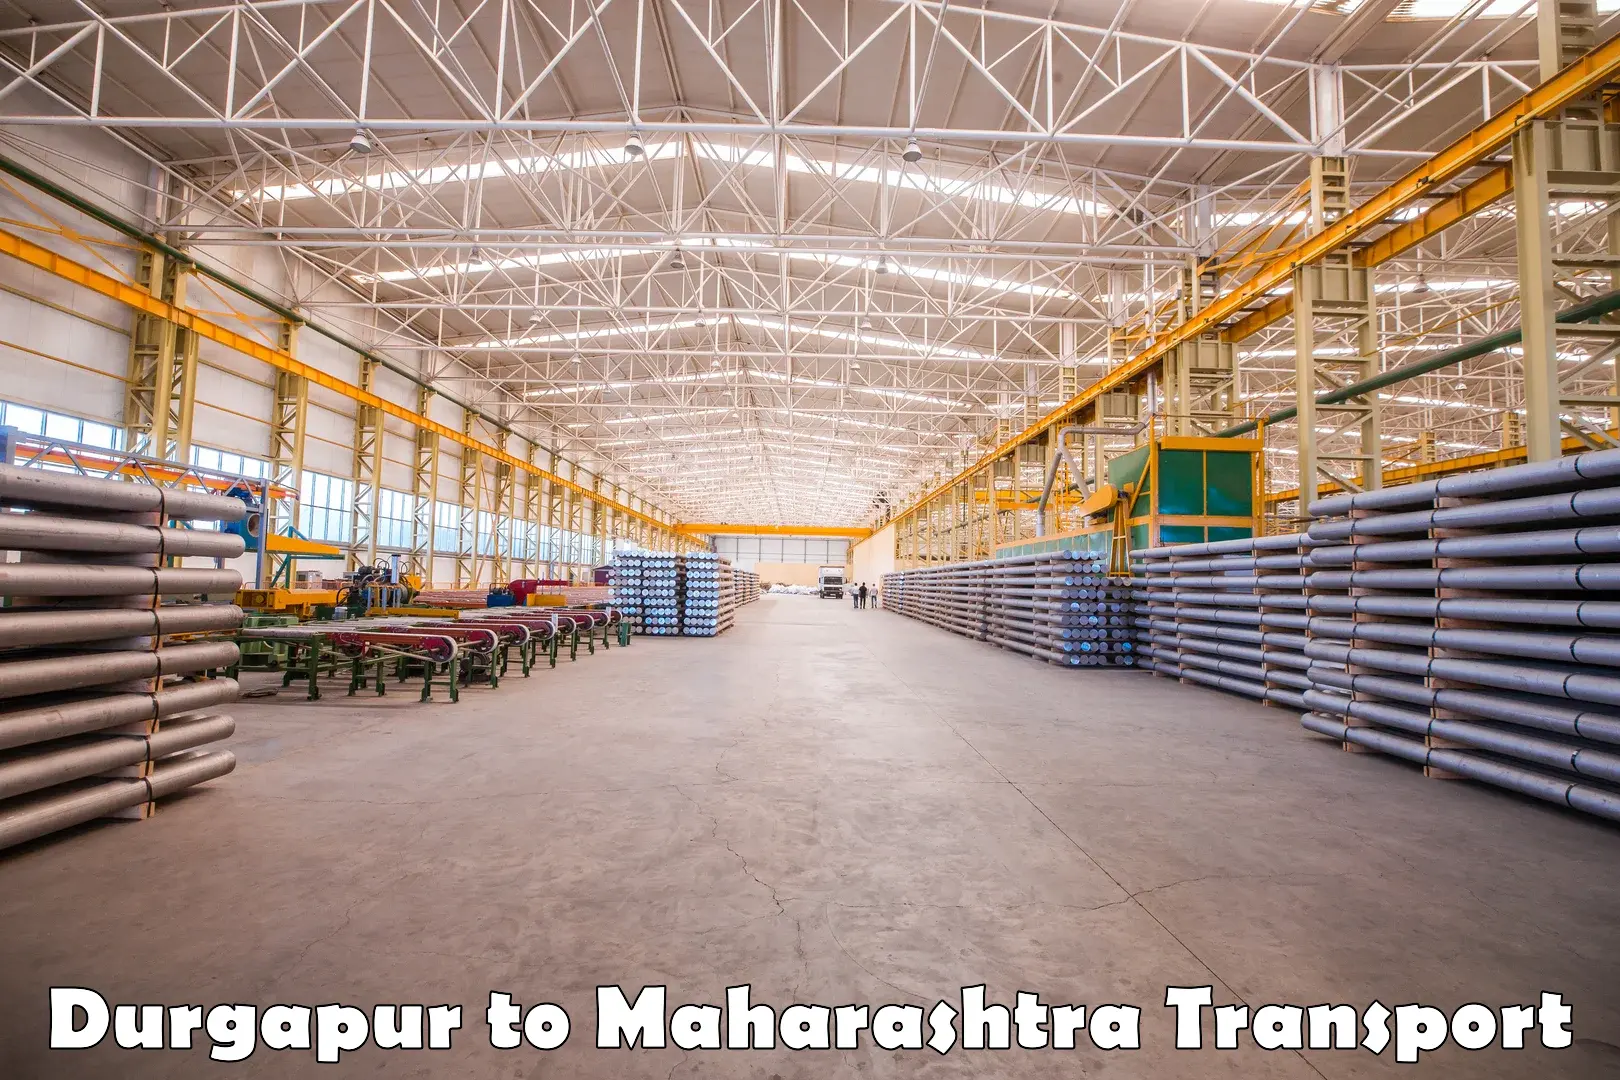 Truck transport companies in India Durgapur to Maharashtra